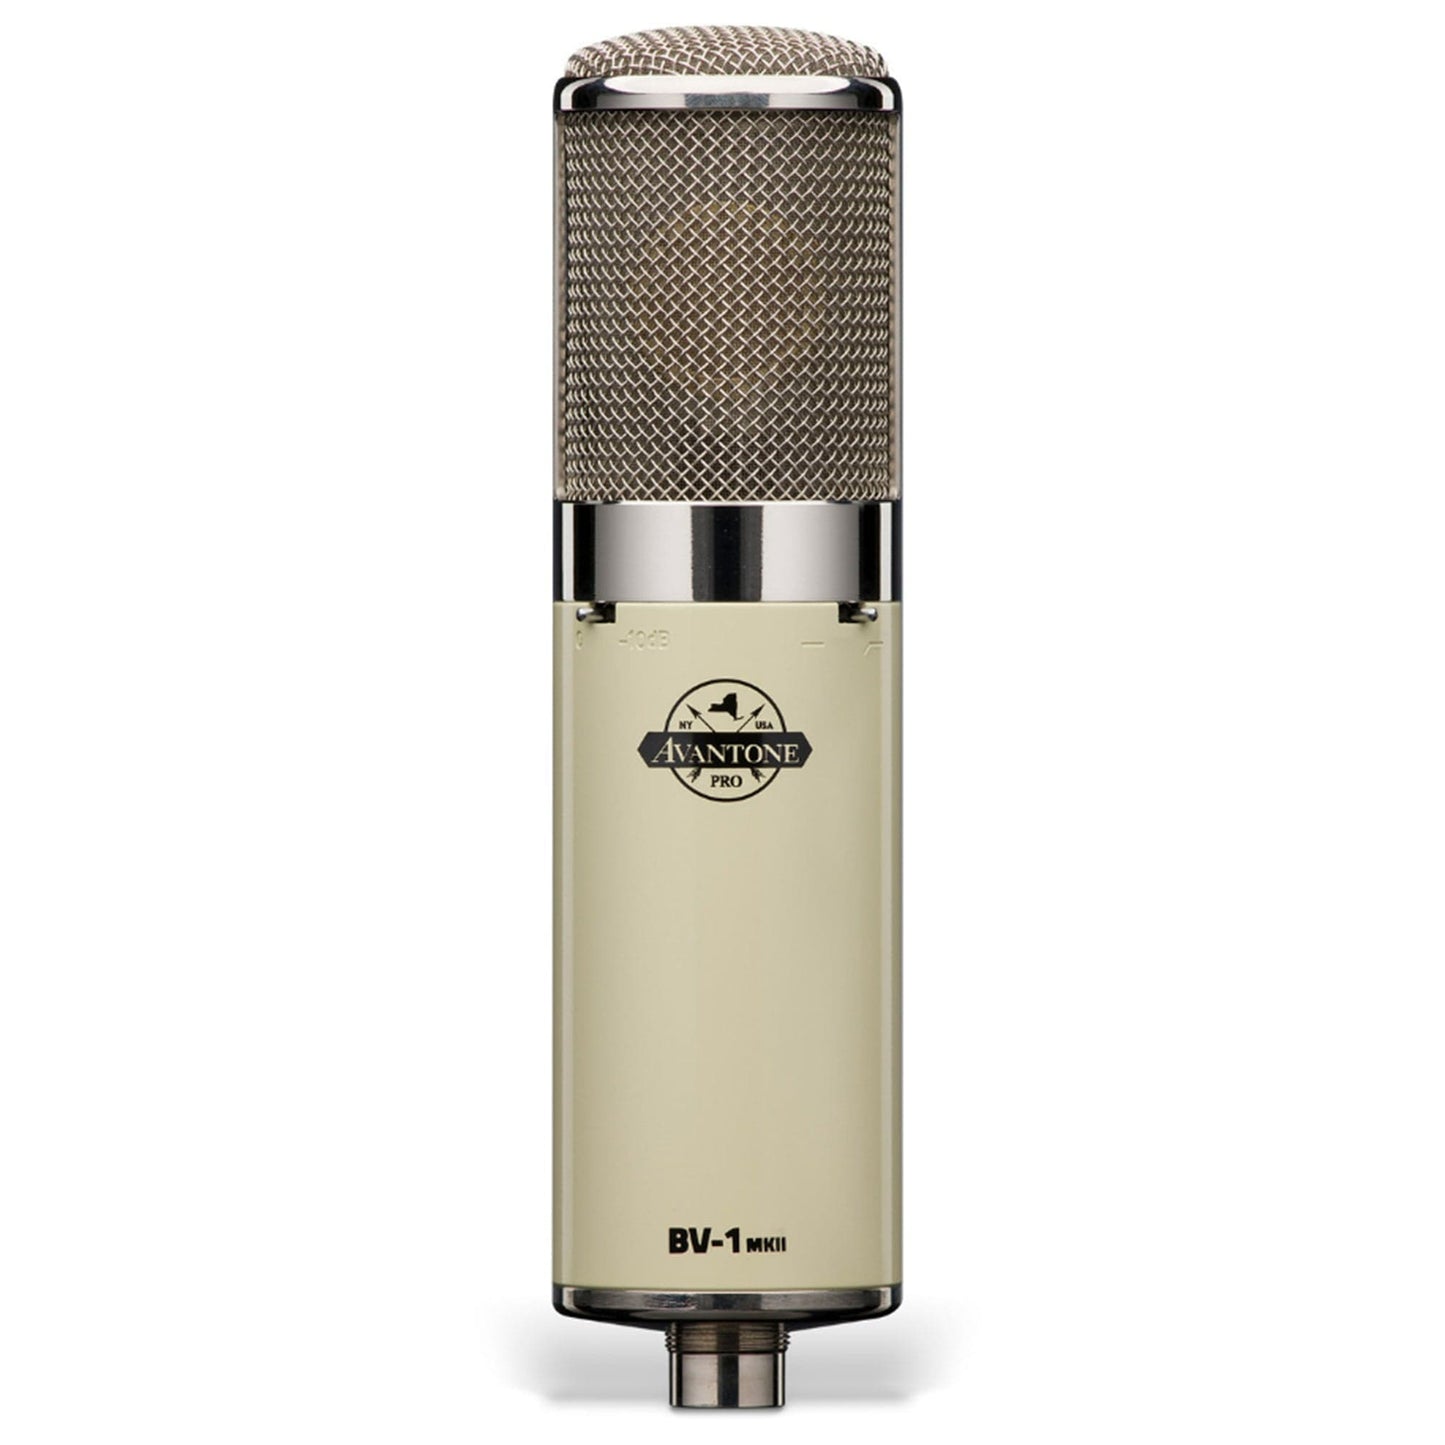 Avantone Pro BV-1 MKII Large Diaphragm Tube Condenser Microphone